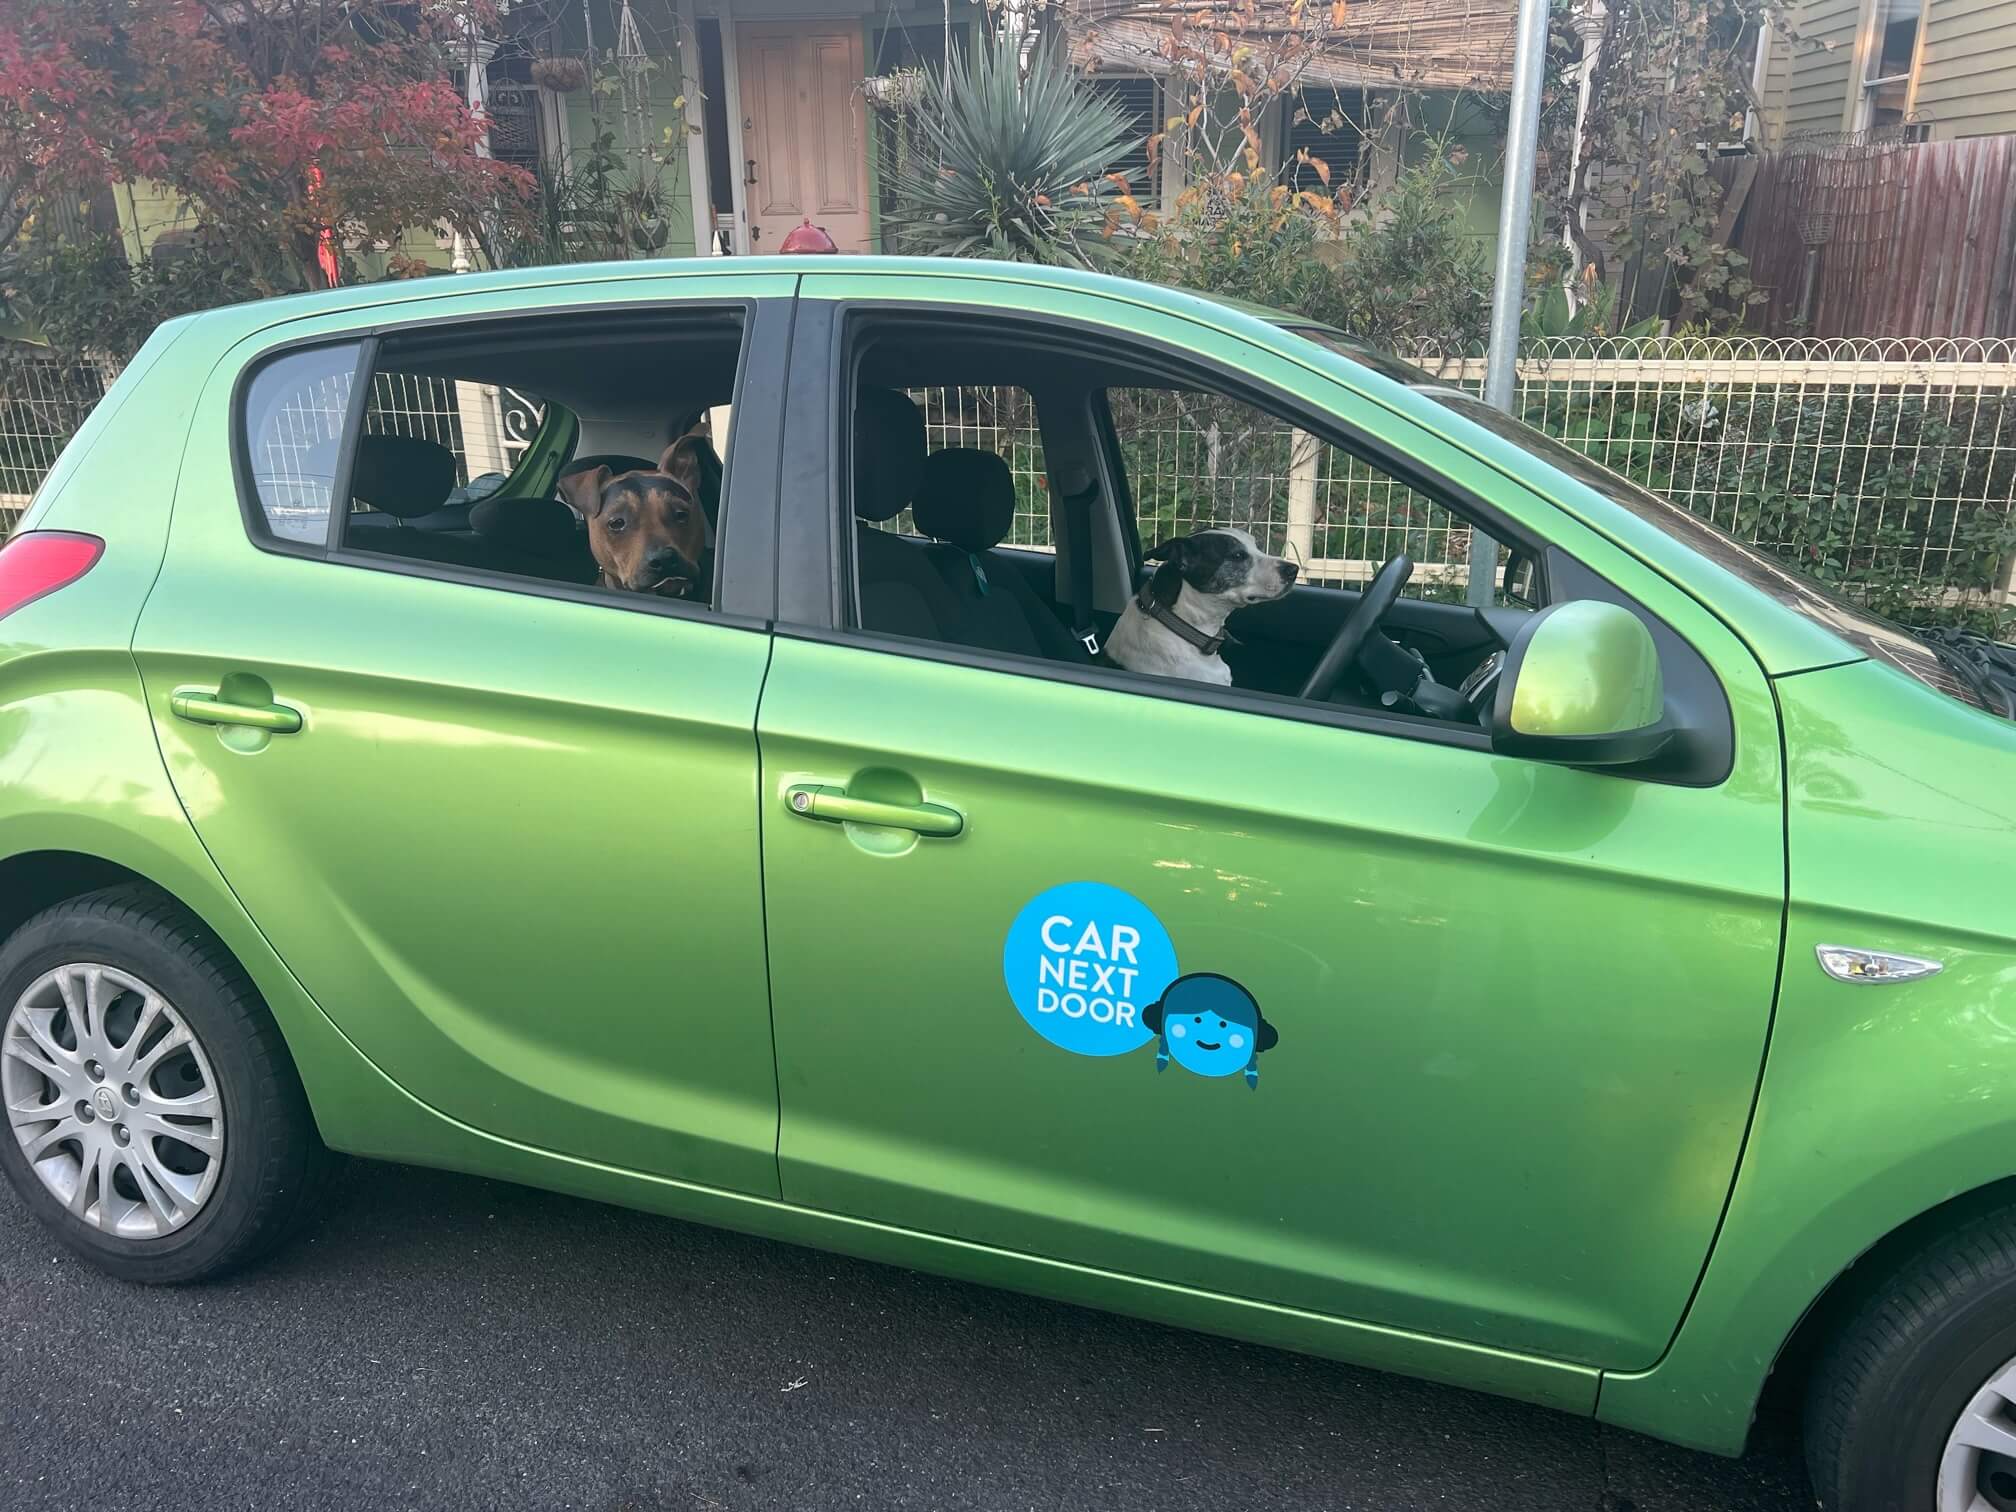 Pictured: Dog friendly car rental